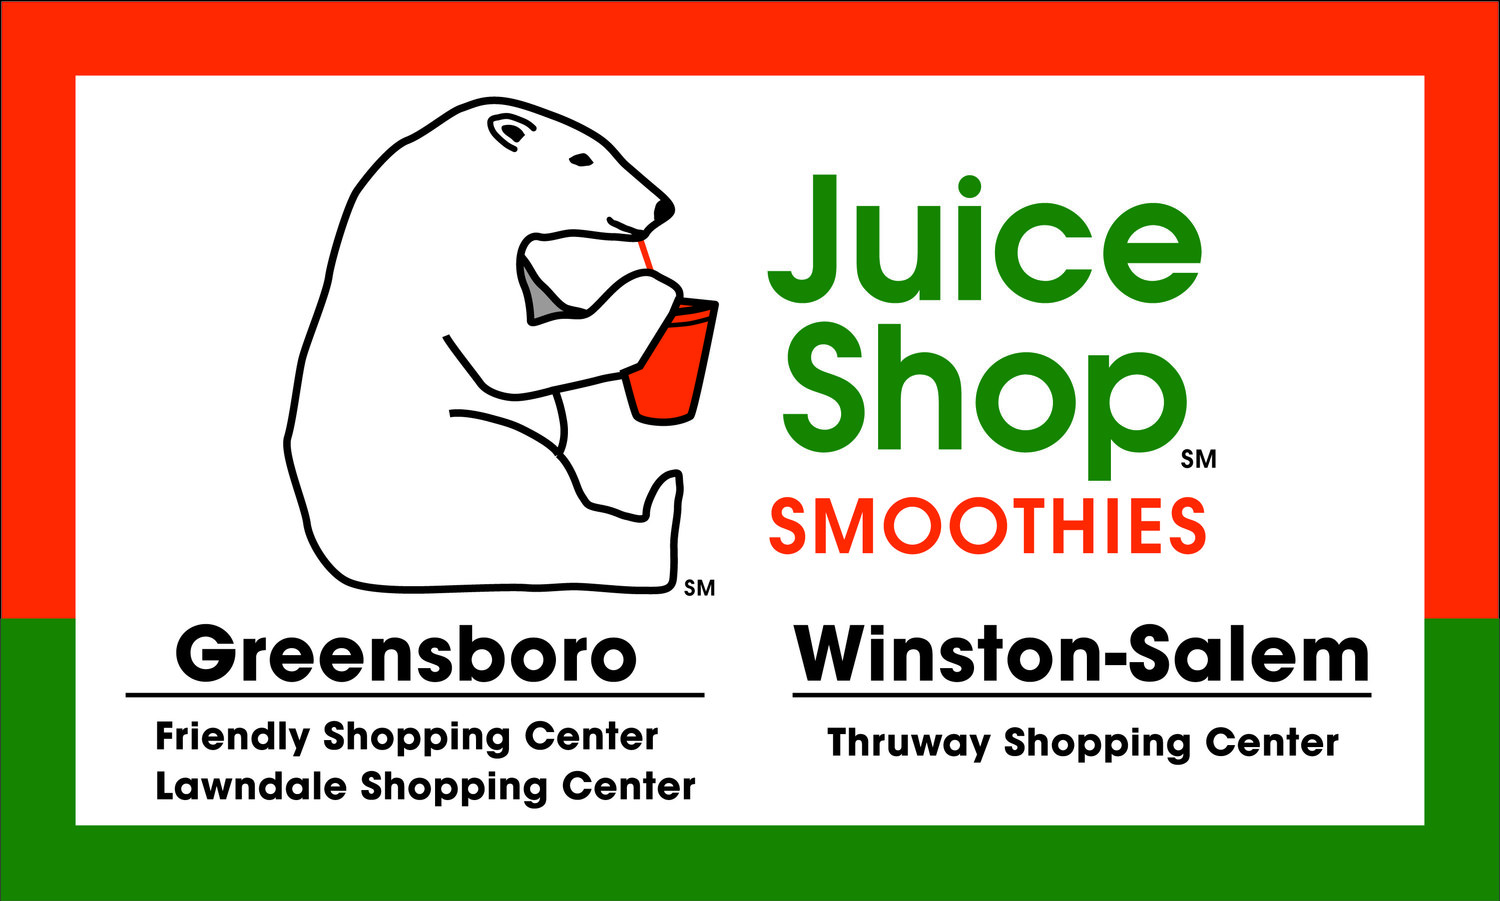 Juice Shop Smoothies